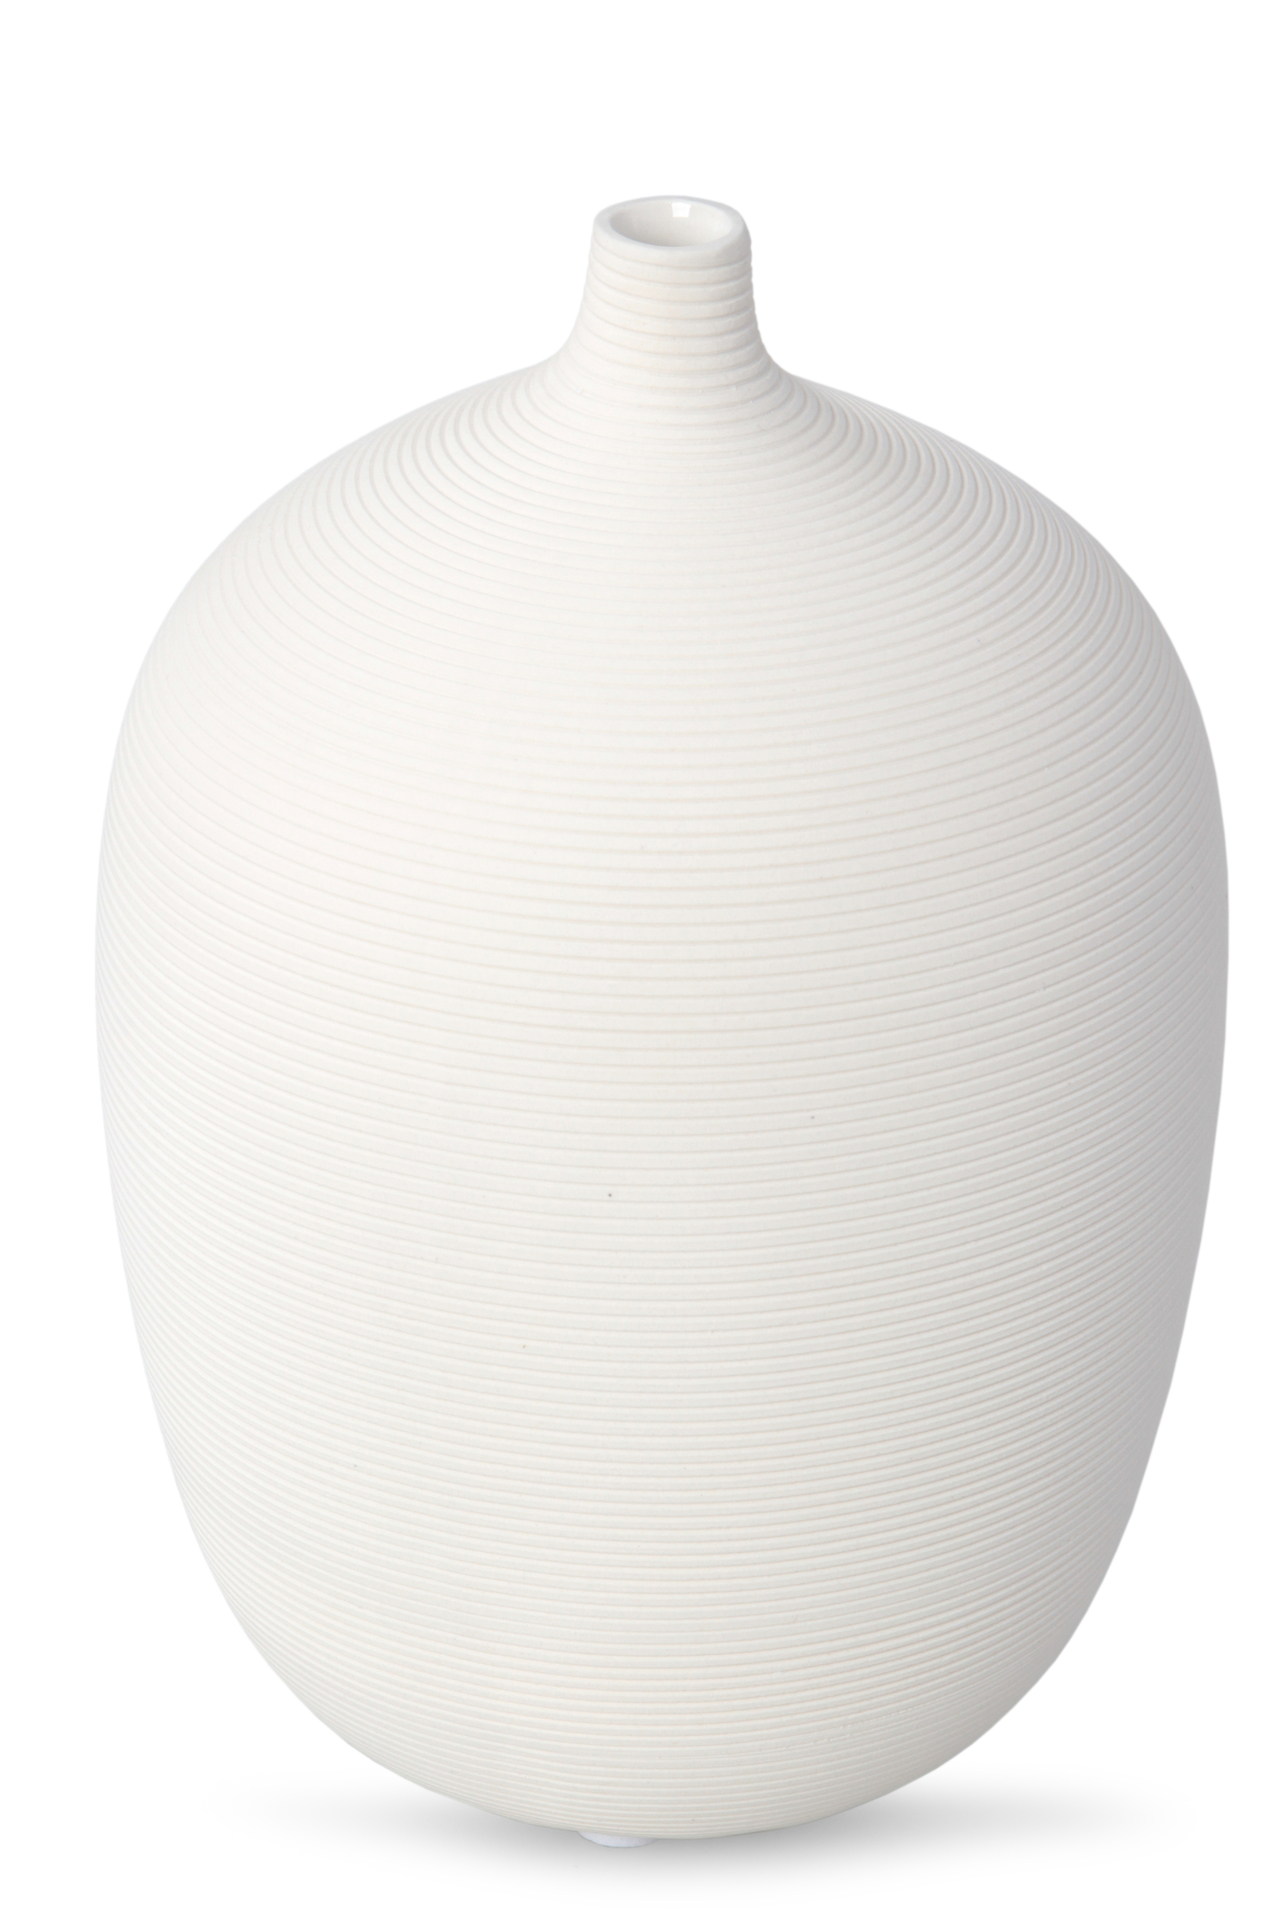 DA89152-Porcelánová váza reliéfna štruktúra